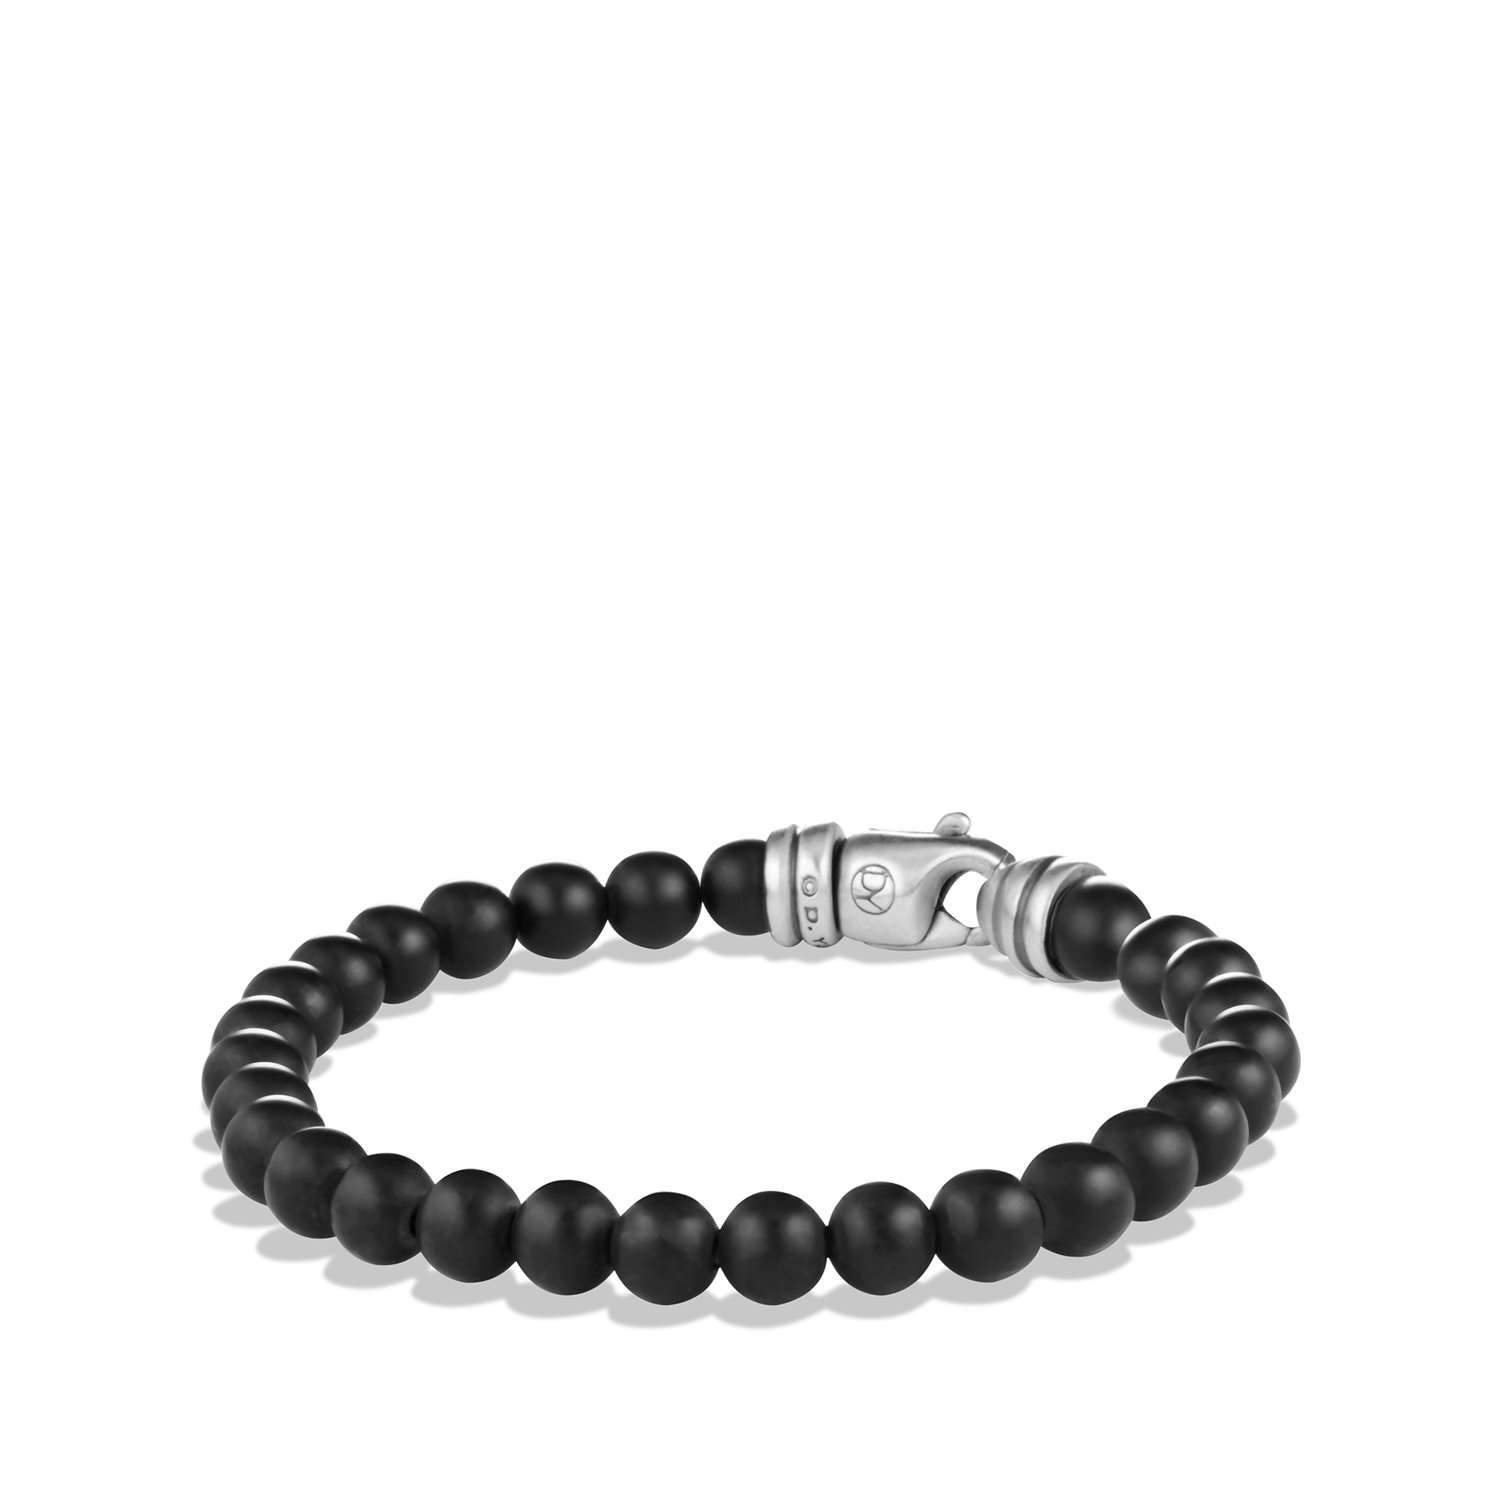 A black Onyx bracelet